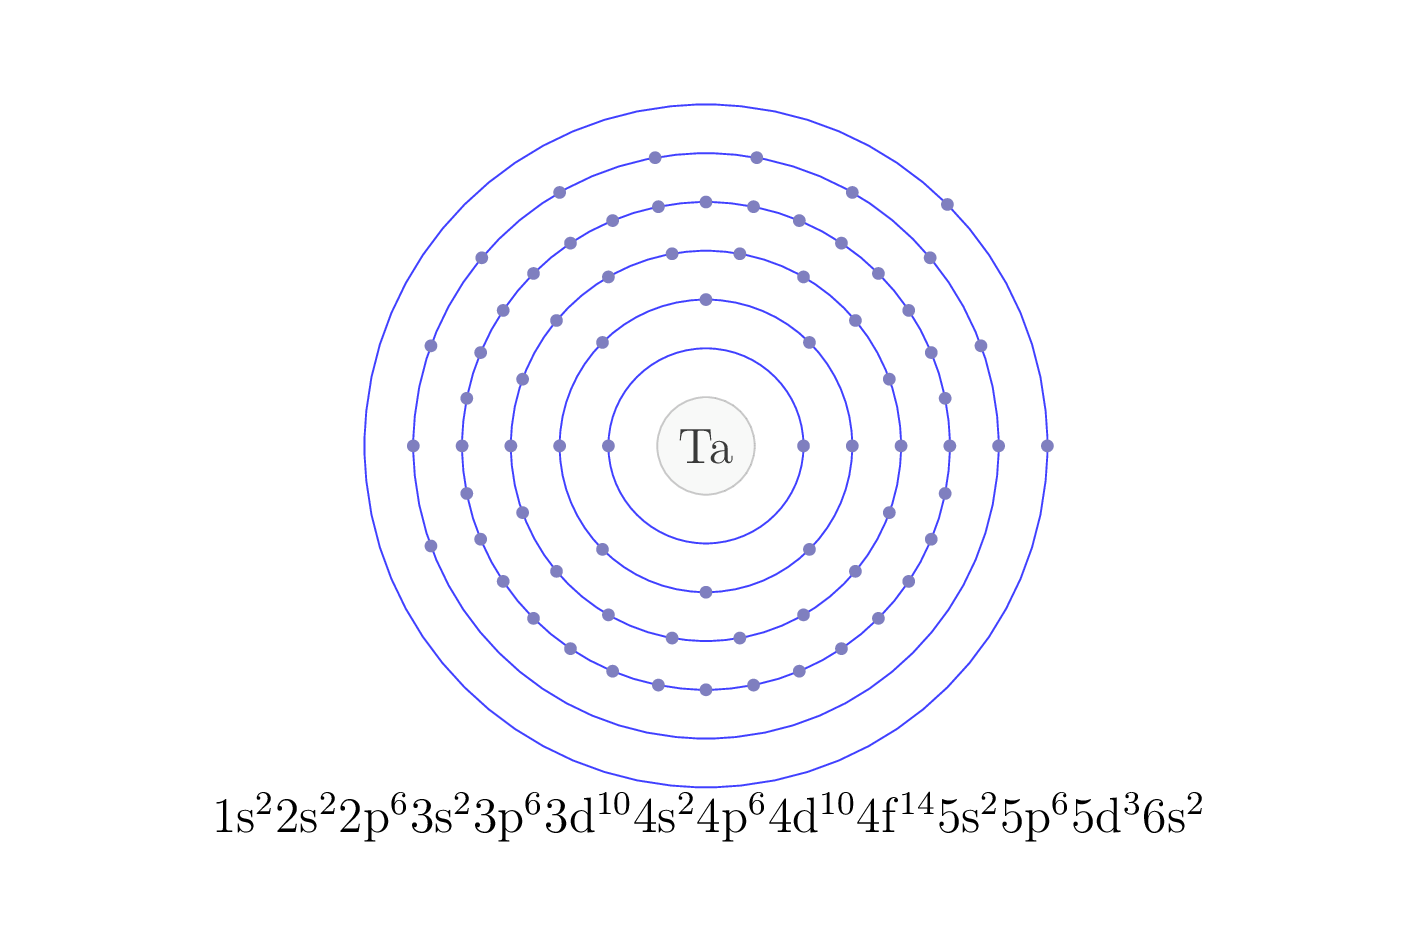 electron configuration of element Ta